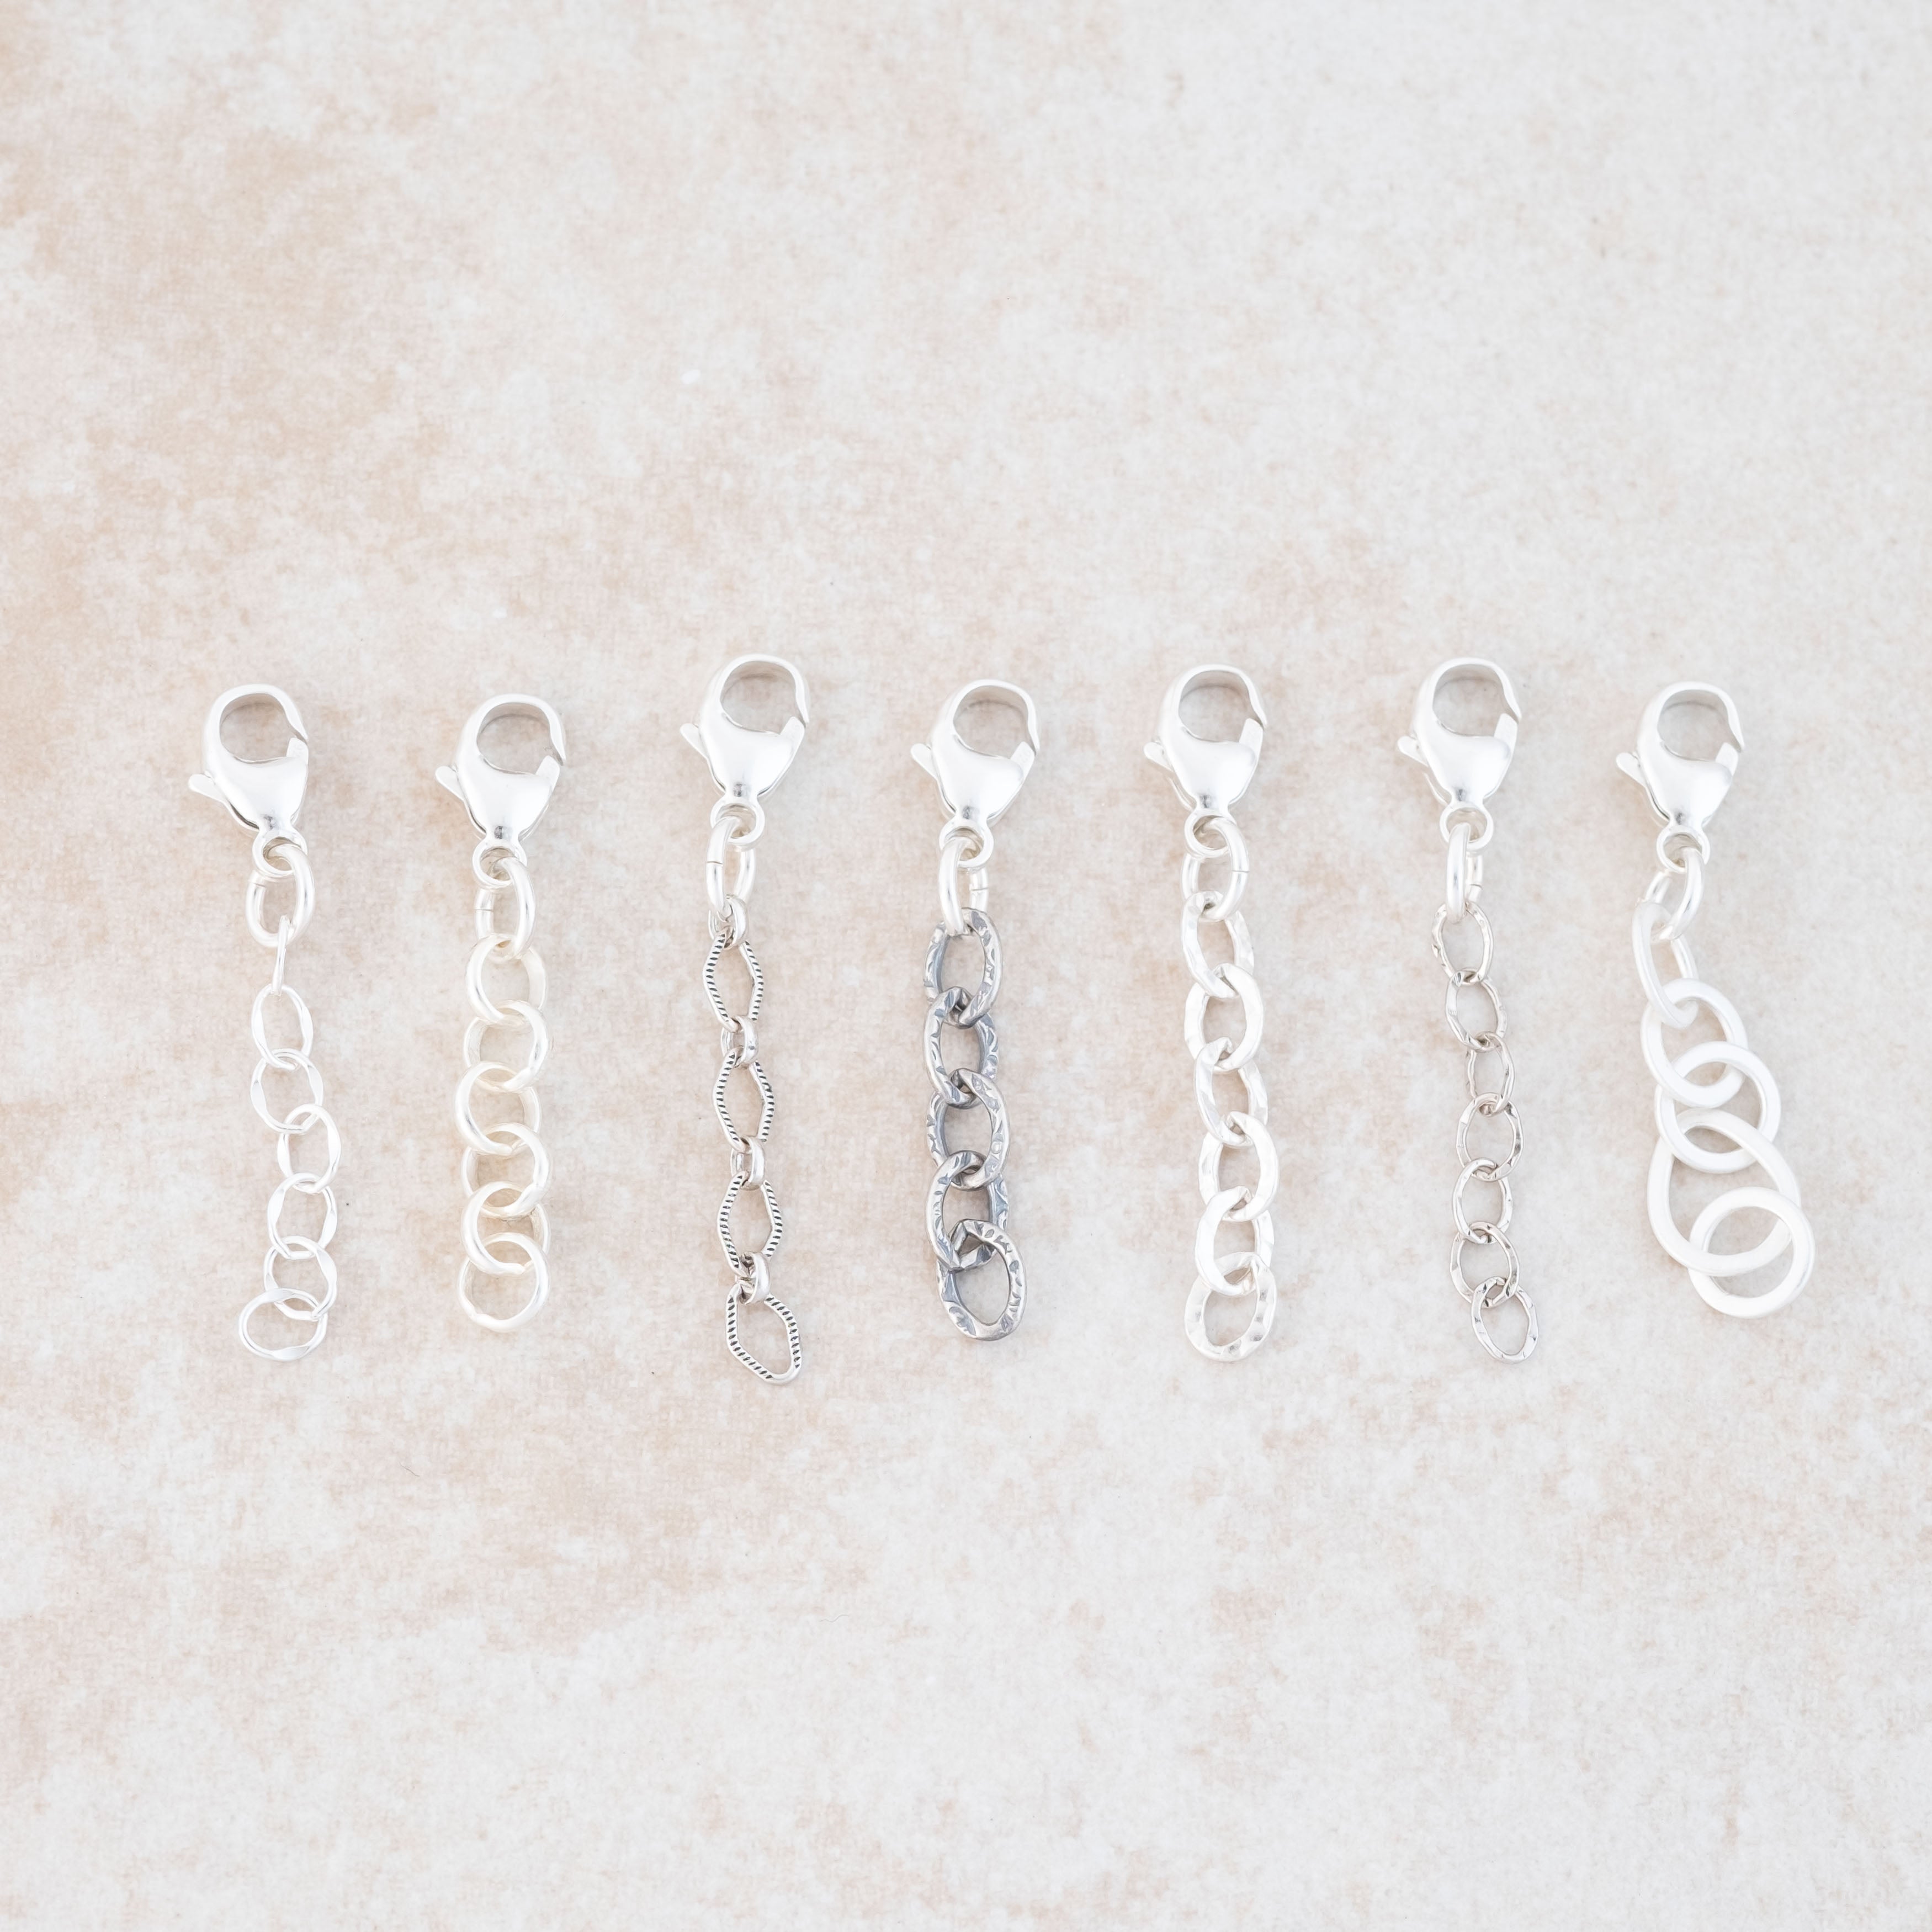 6 Pcs Necklace Extension Bracelet Extender Sterling Silver Hook up Clasp  Chain